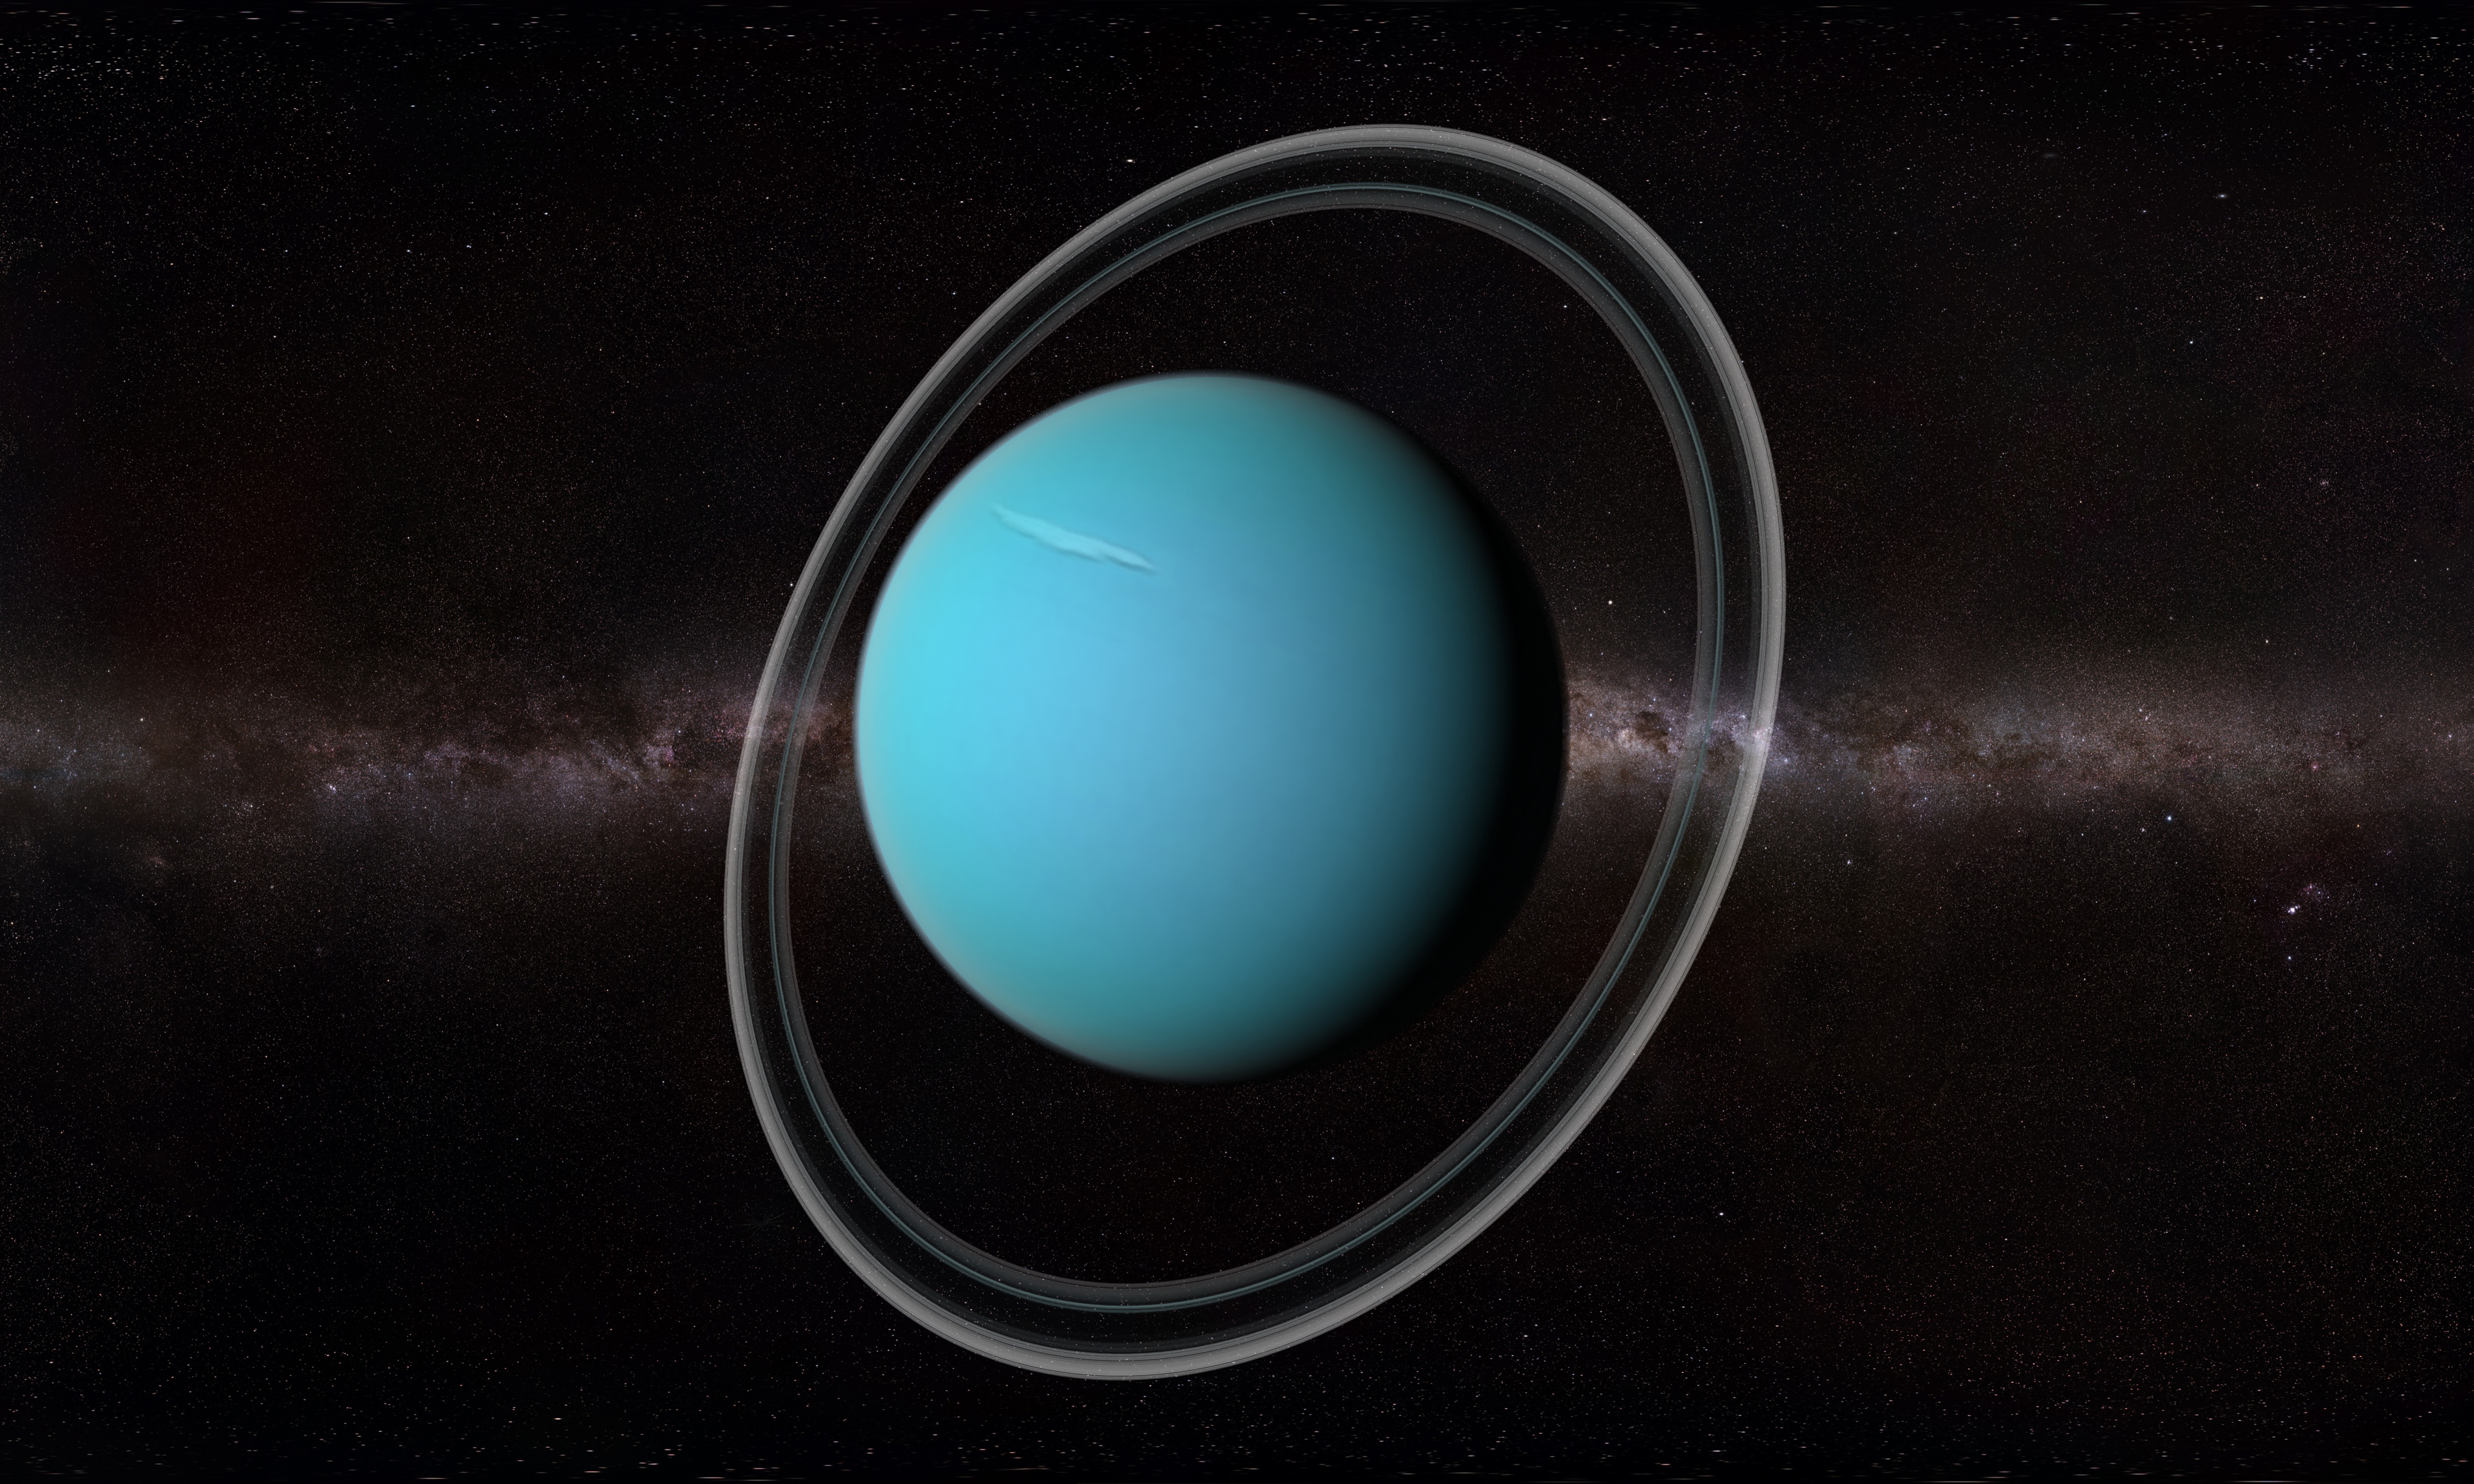 An artist's illustration of Uranus, a strange ringed-planet that sits on its side.